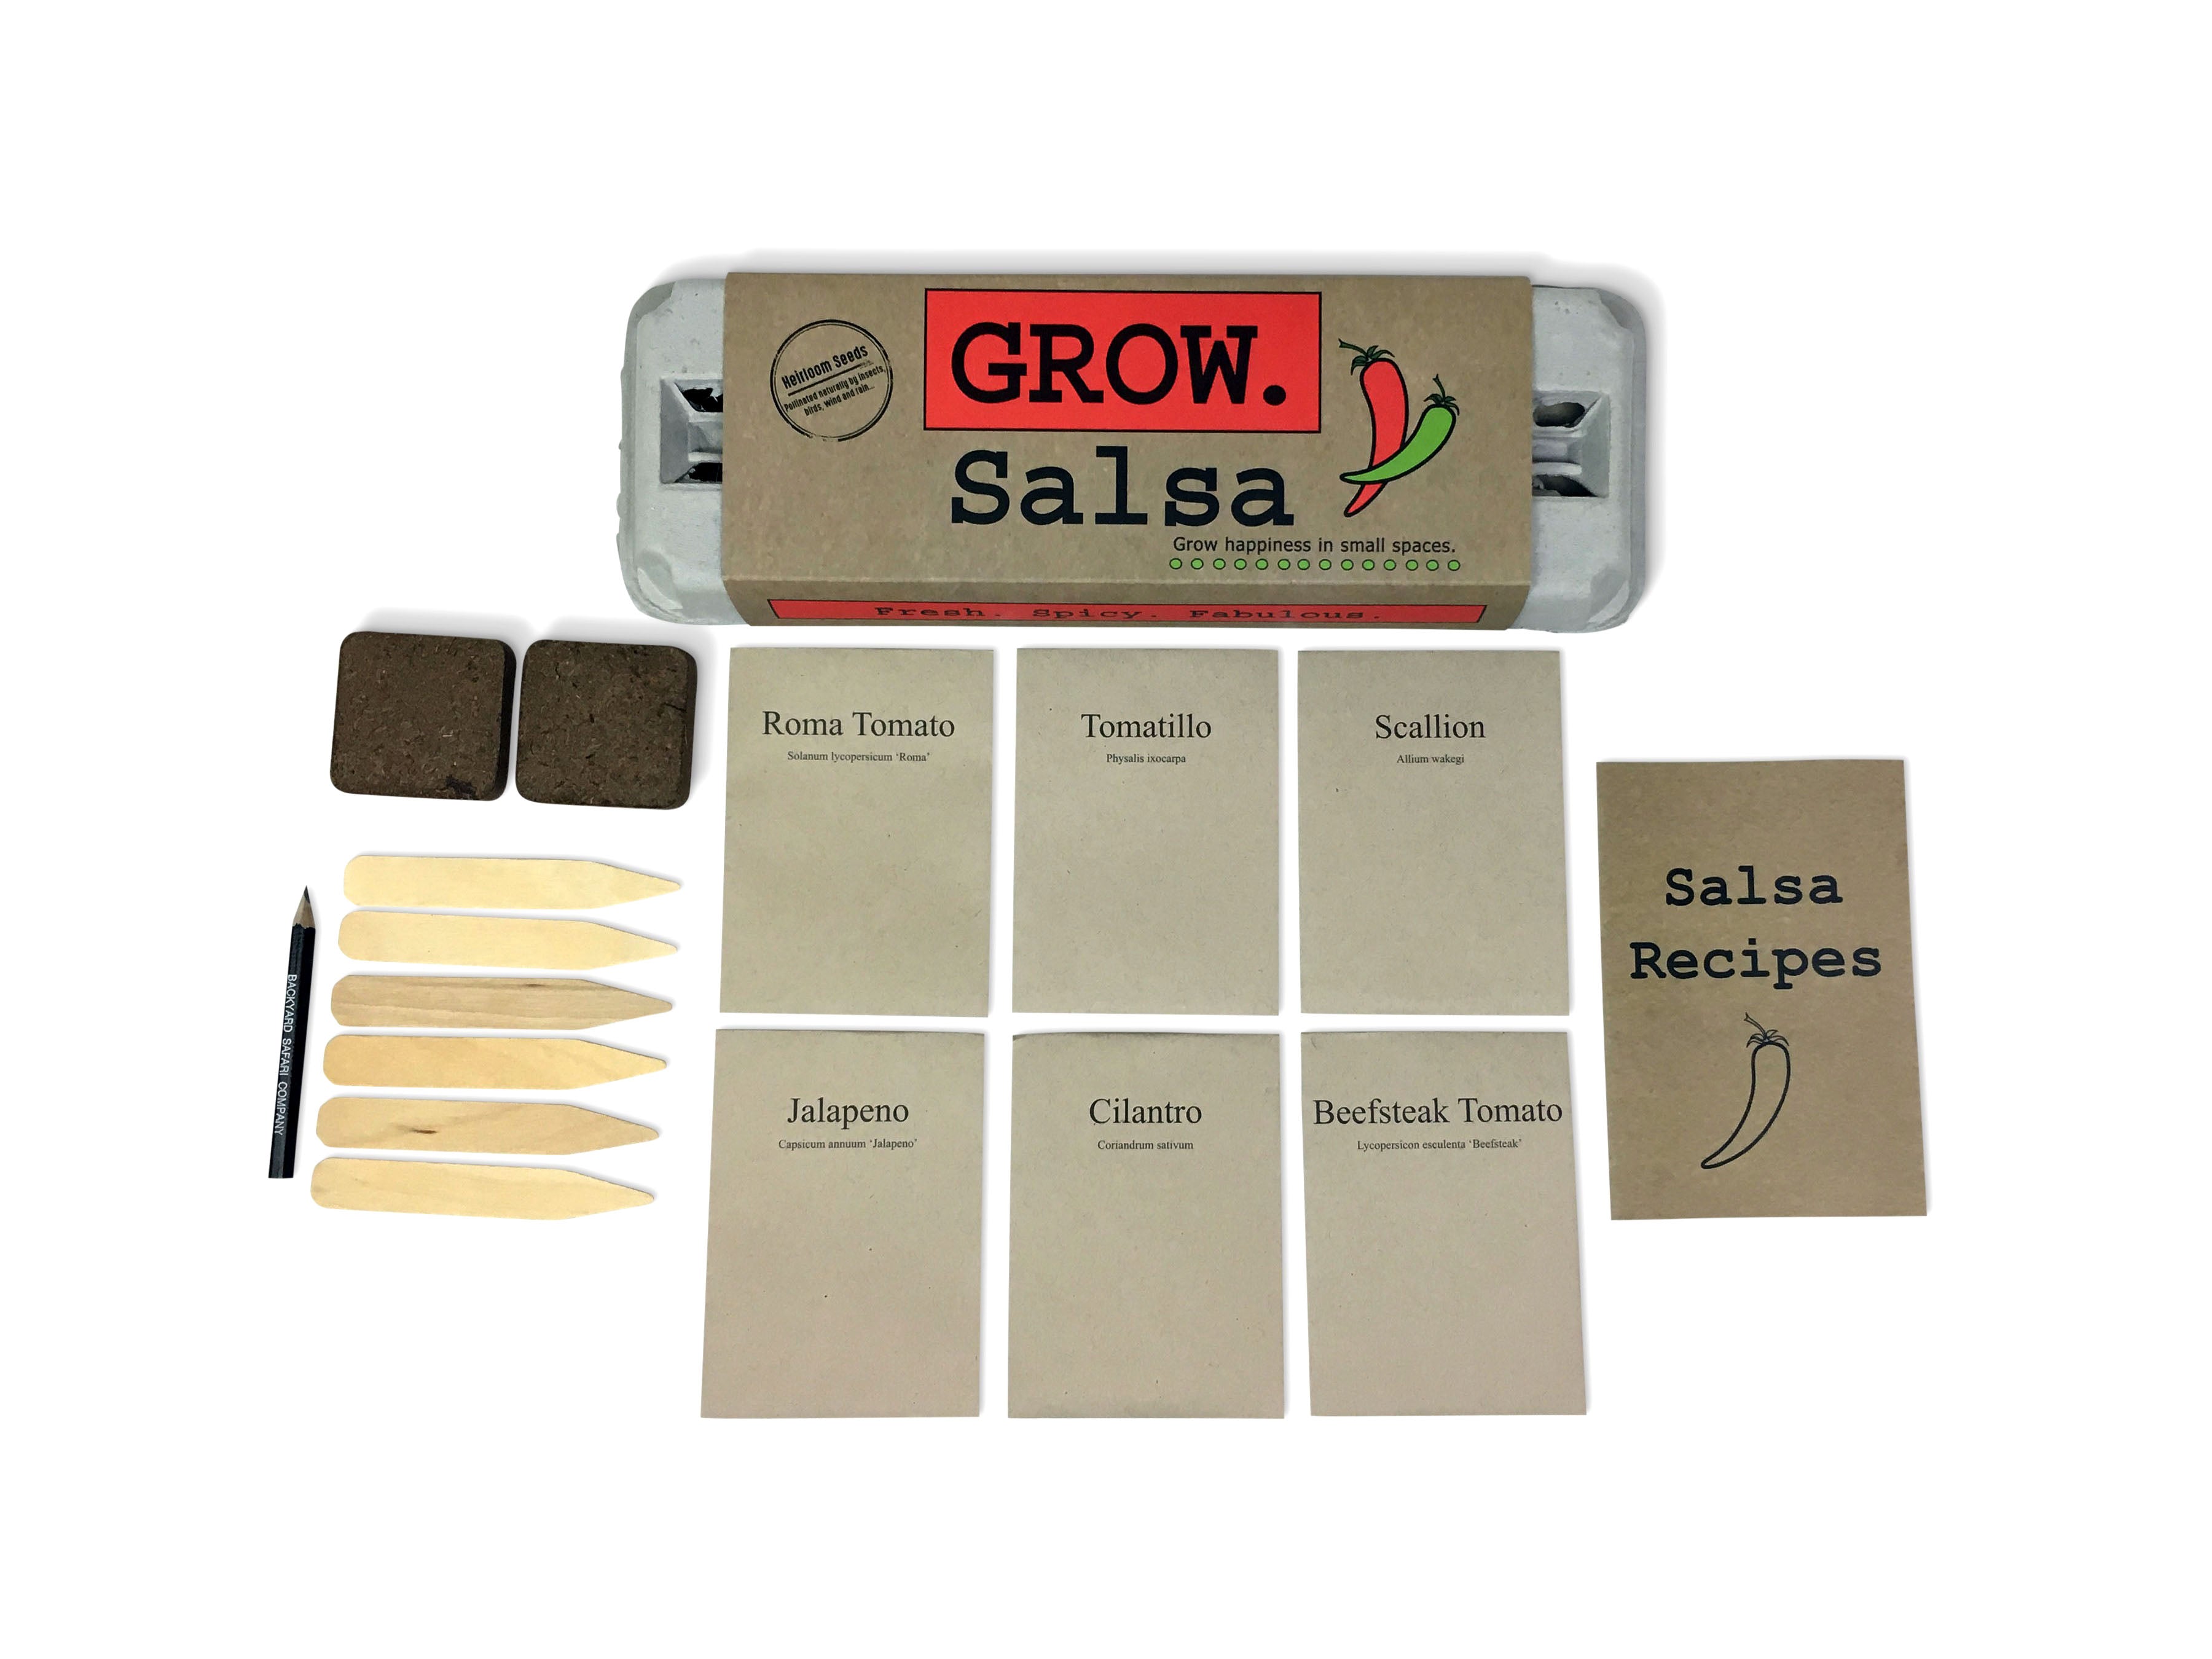 Salsa Garden Kit - Grow Your Own Salsa